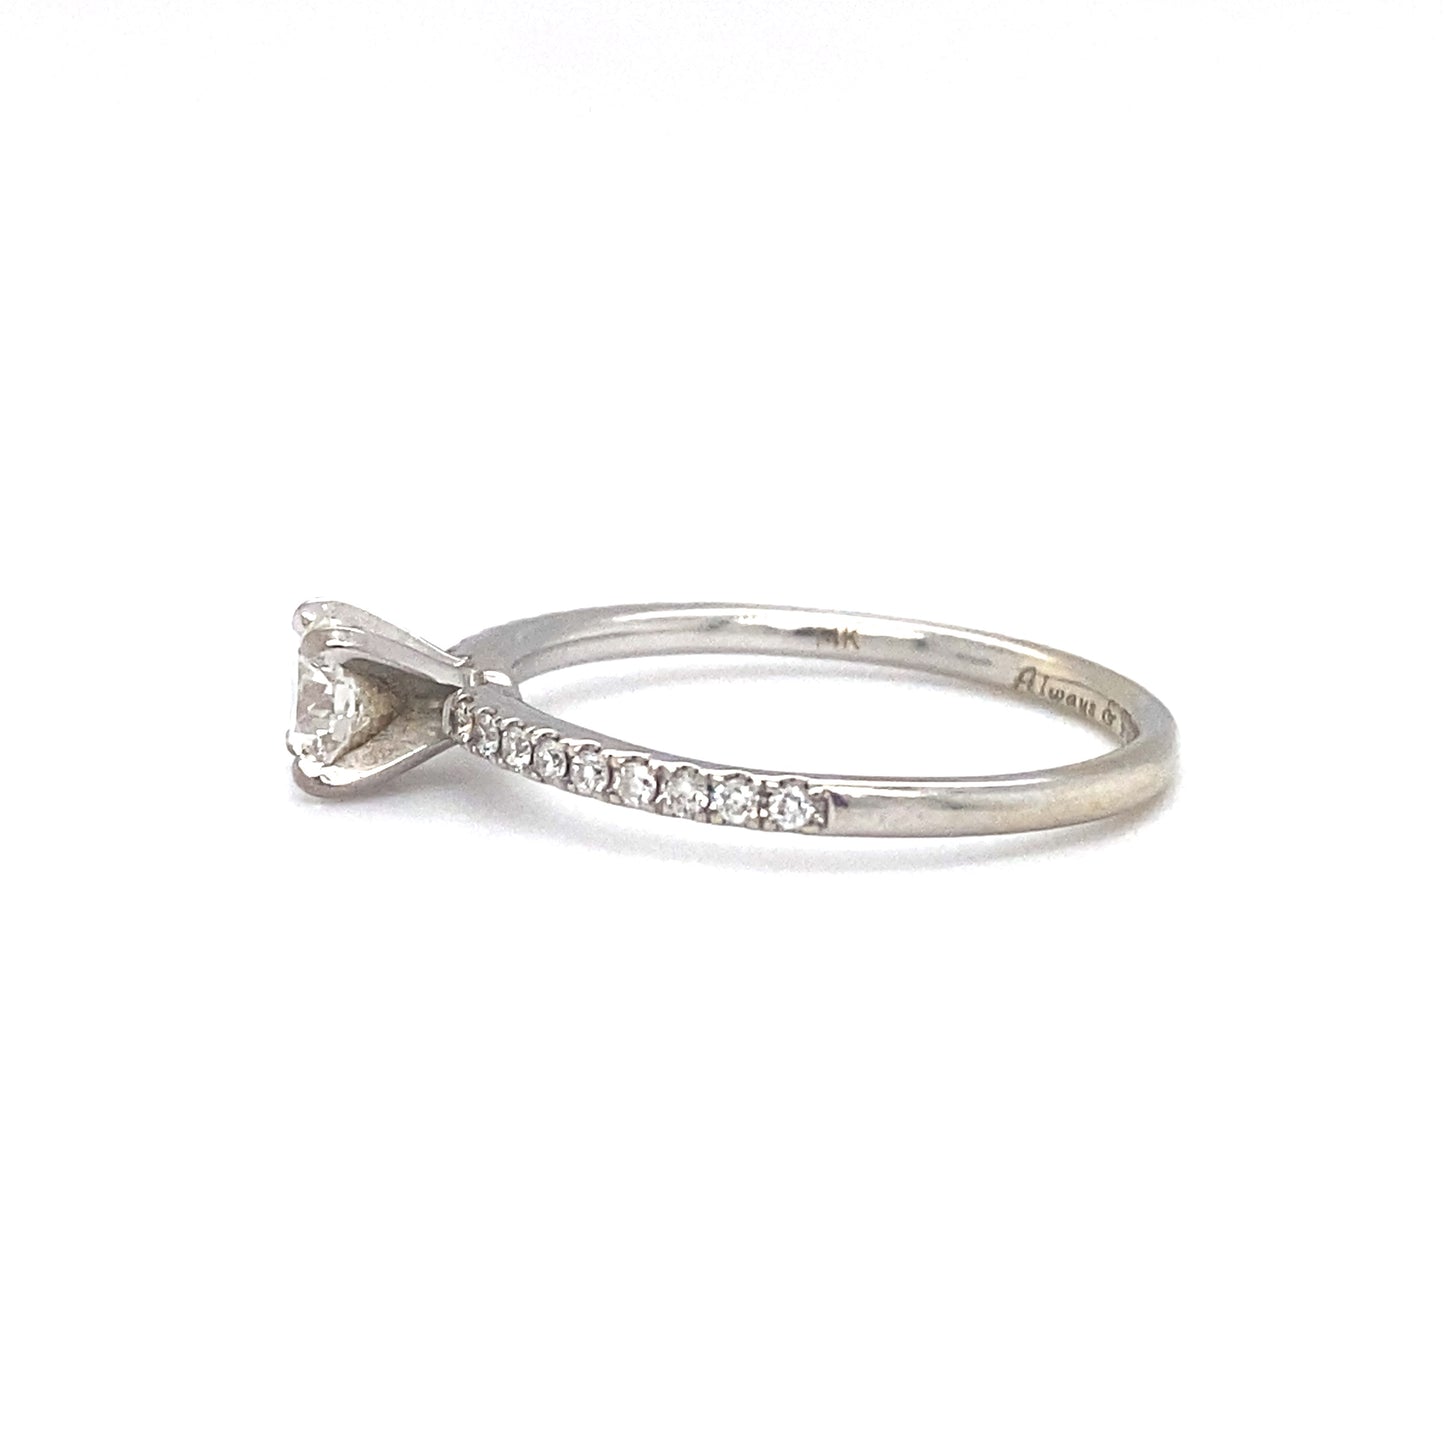 Circa 200s 0.50ct Round Diamond Engagement Ring in 14K White Gold